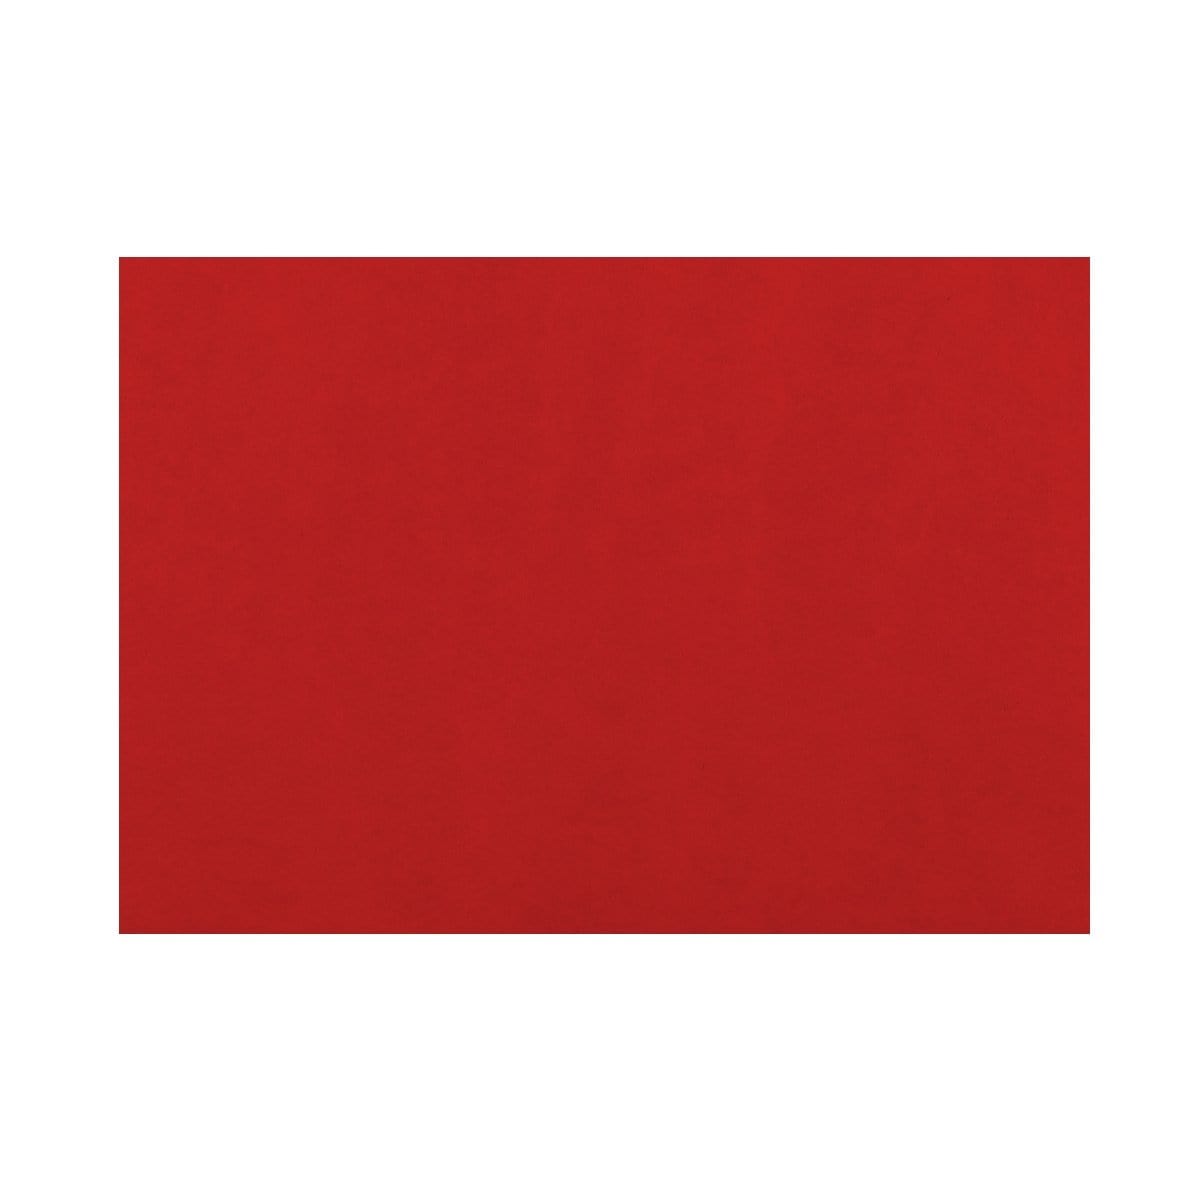 C6 Crimson Red 120gsm Peel & Seal Envelopes [Qty 250] 114 x 162mm - All Colour Envelopes